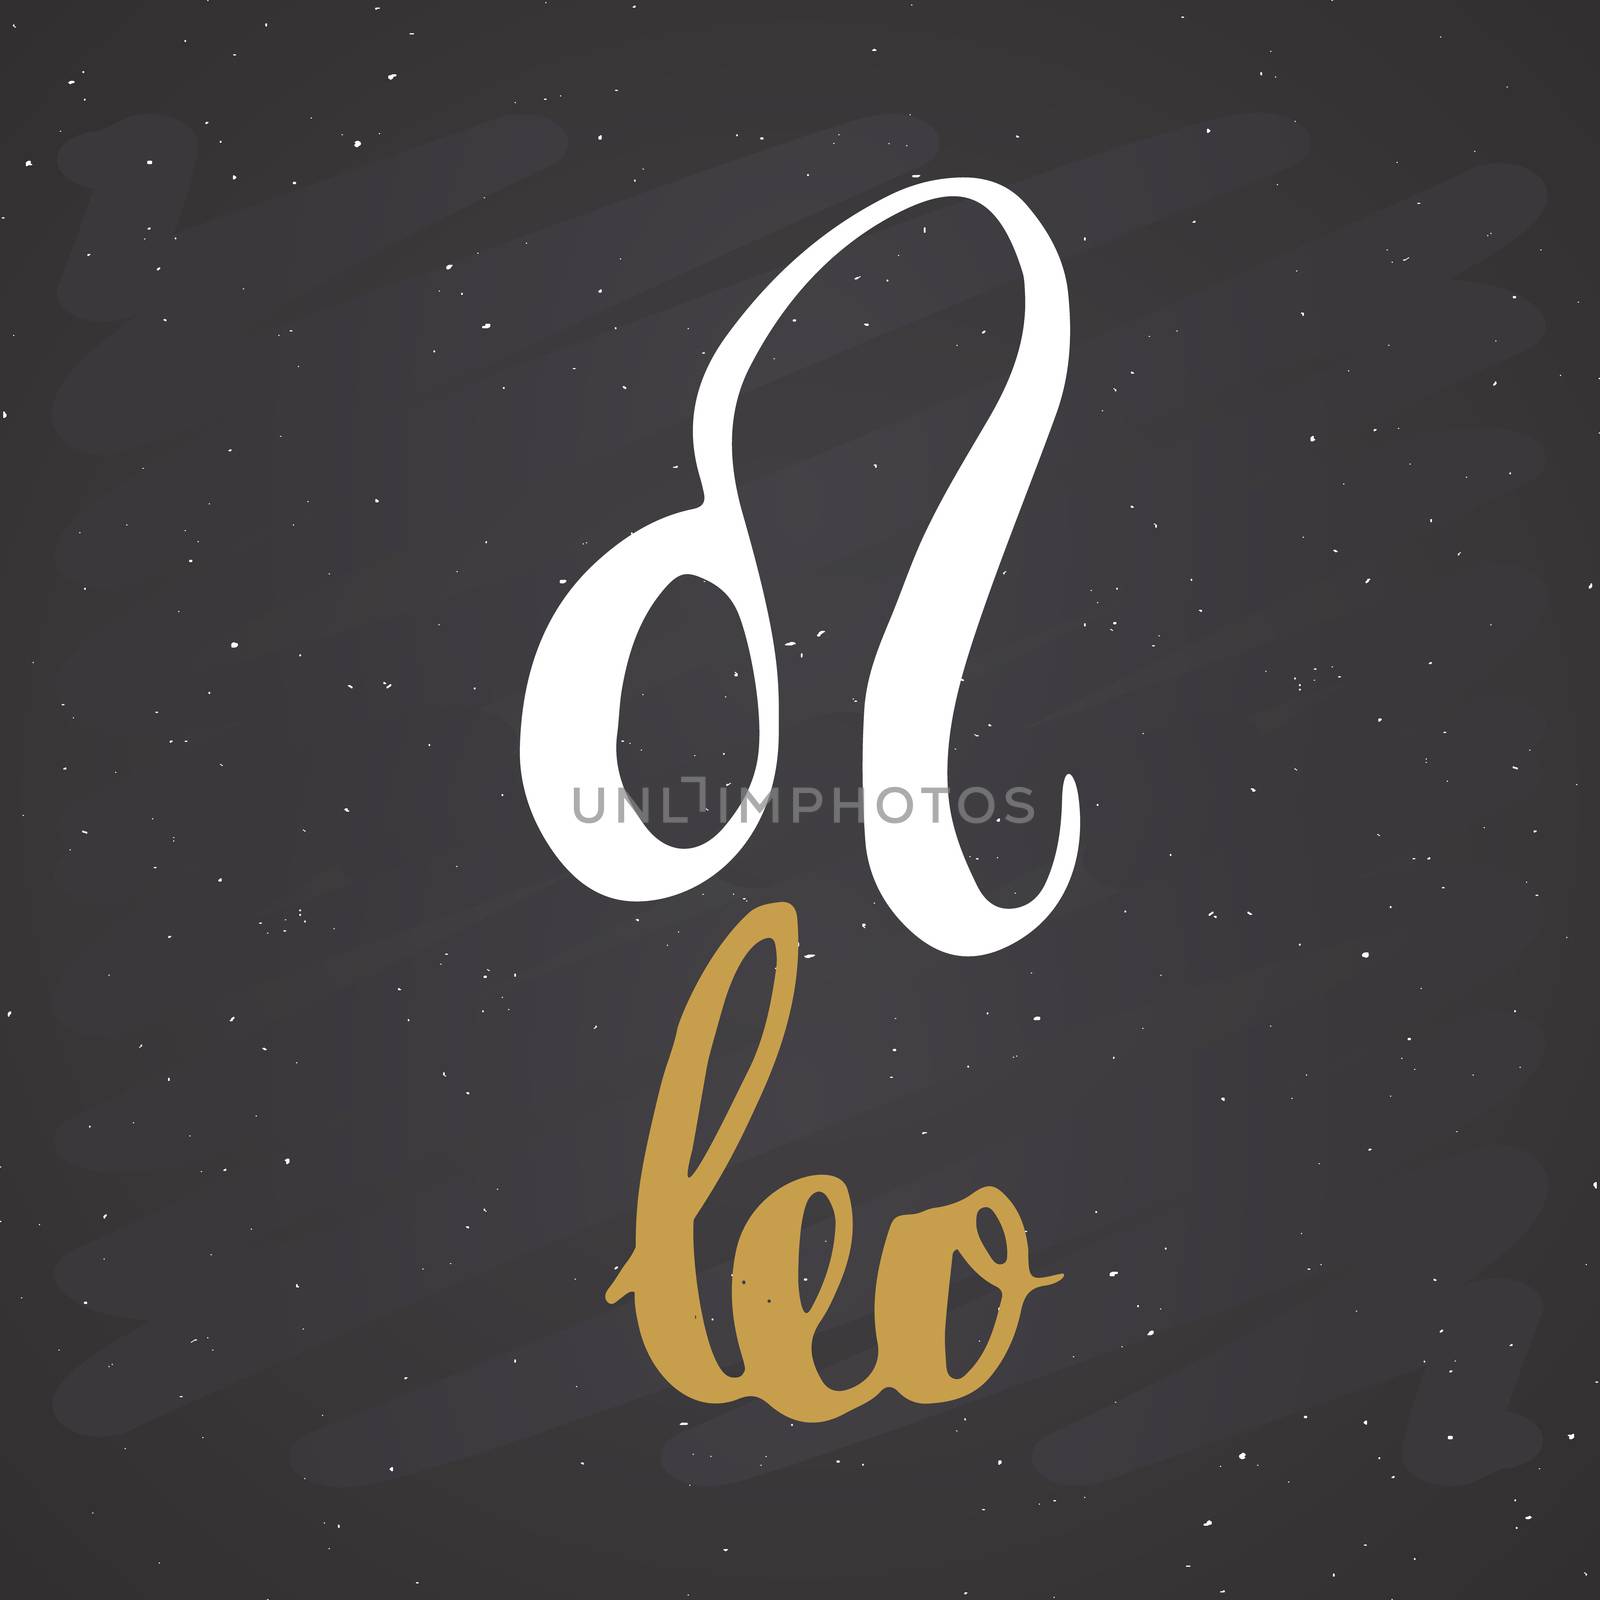 Zodiac sign Leo and lettering. Hand drawn horoscope astrology symbol, grunge textured design, typography print, vector illustration on chalkboard background by Lemon_workshop